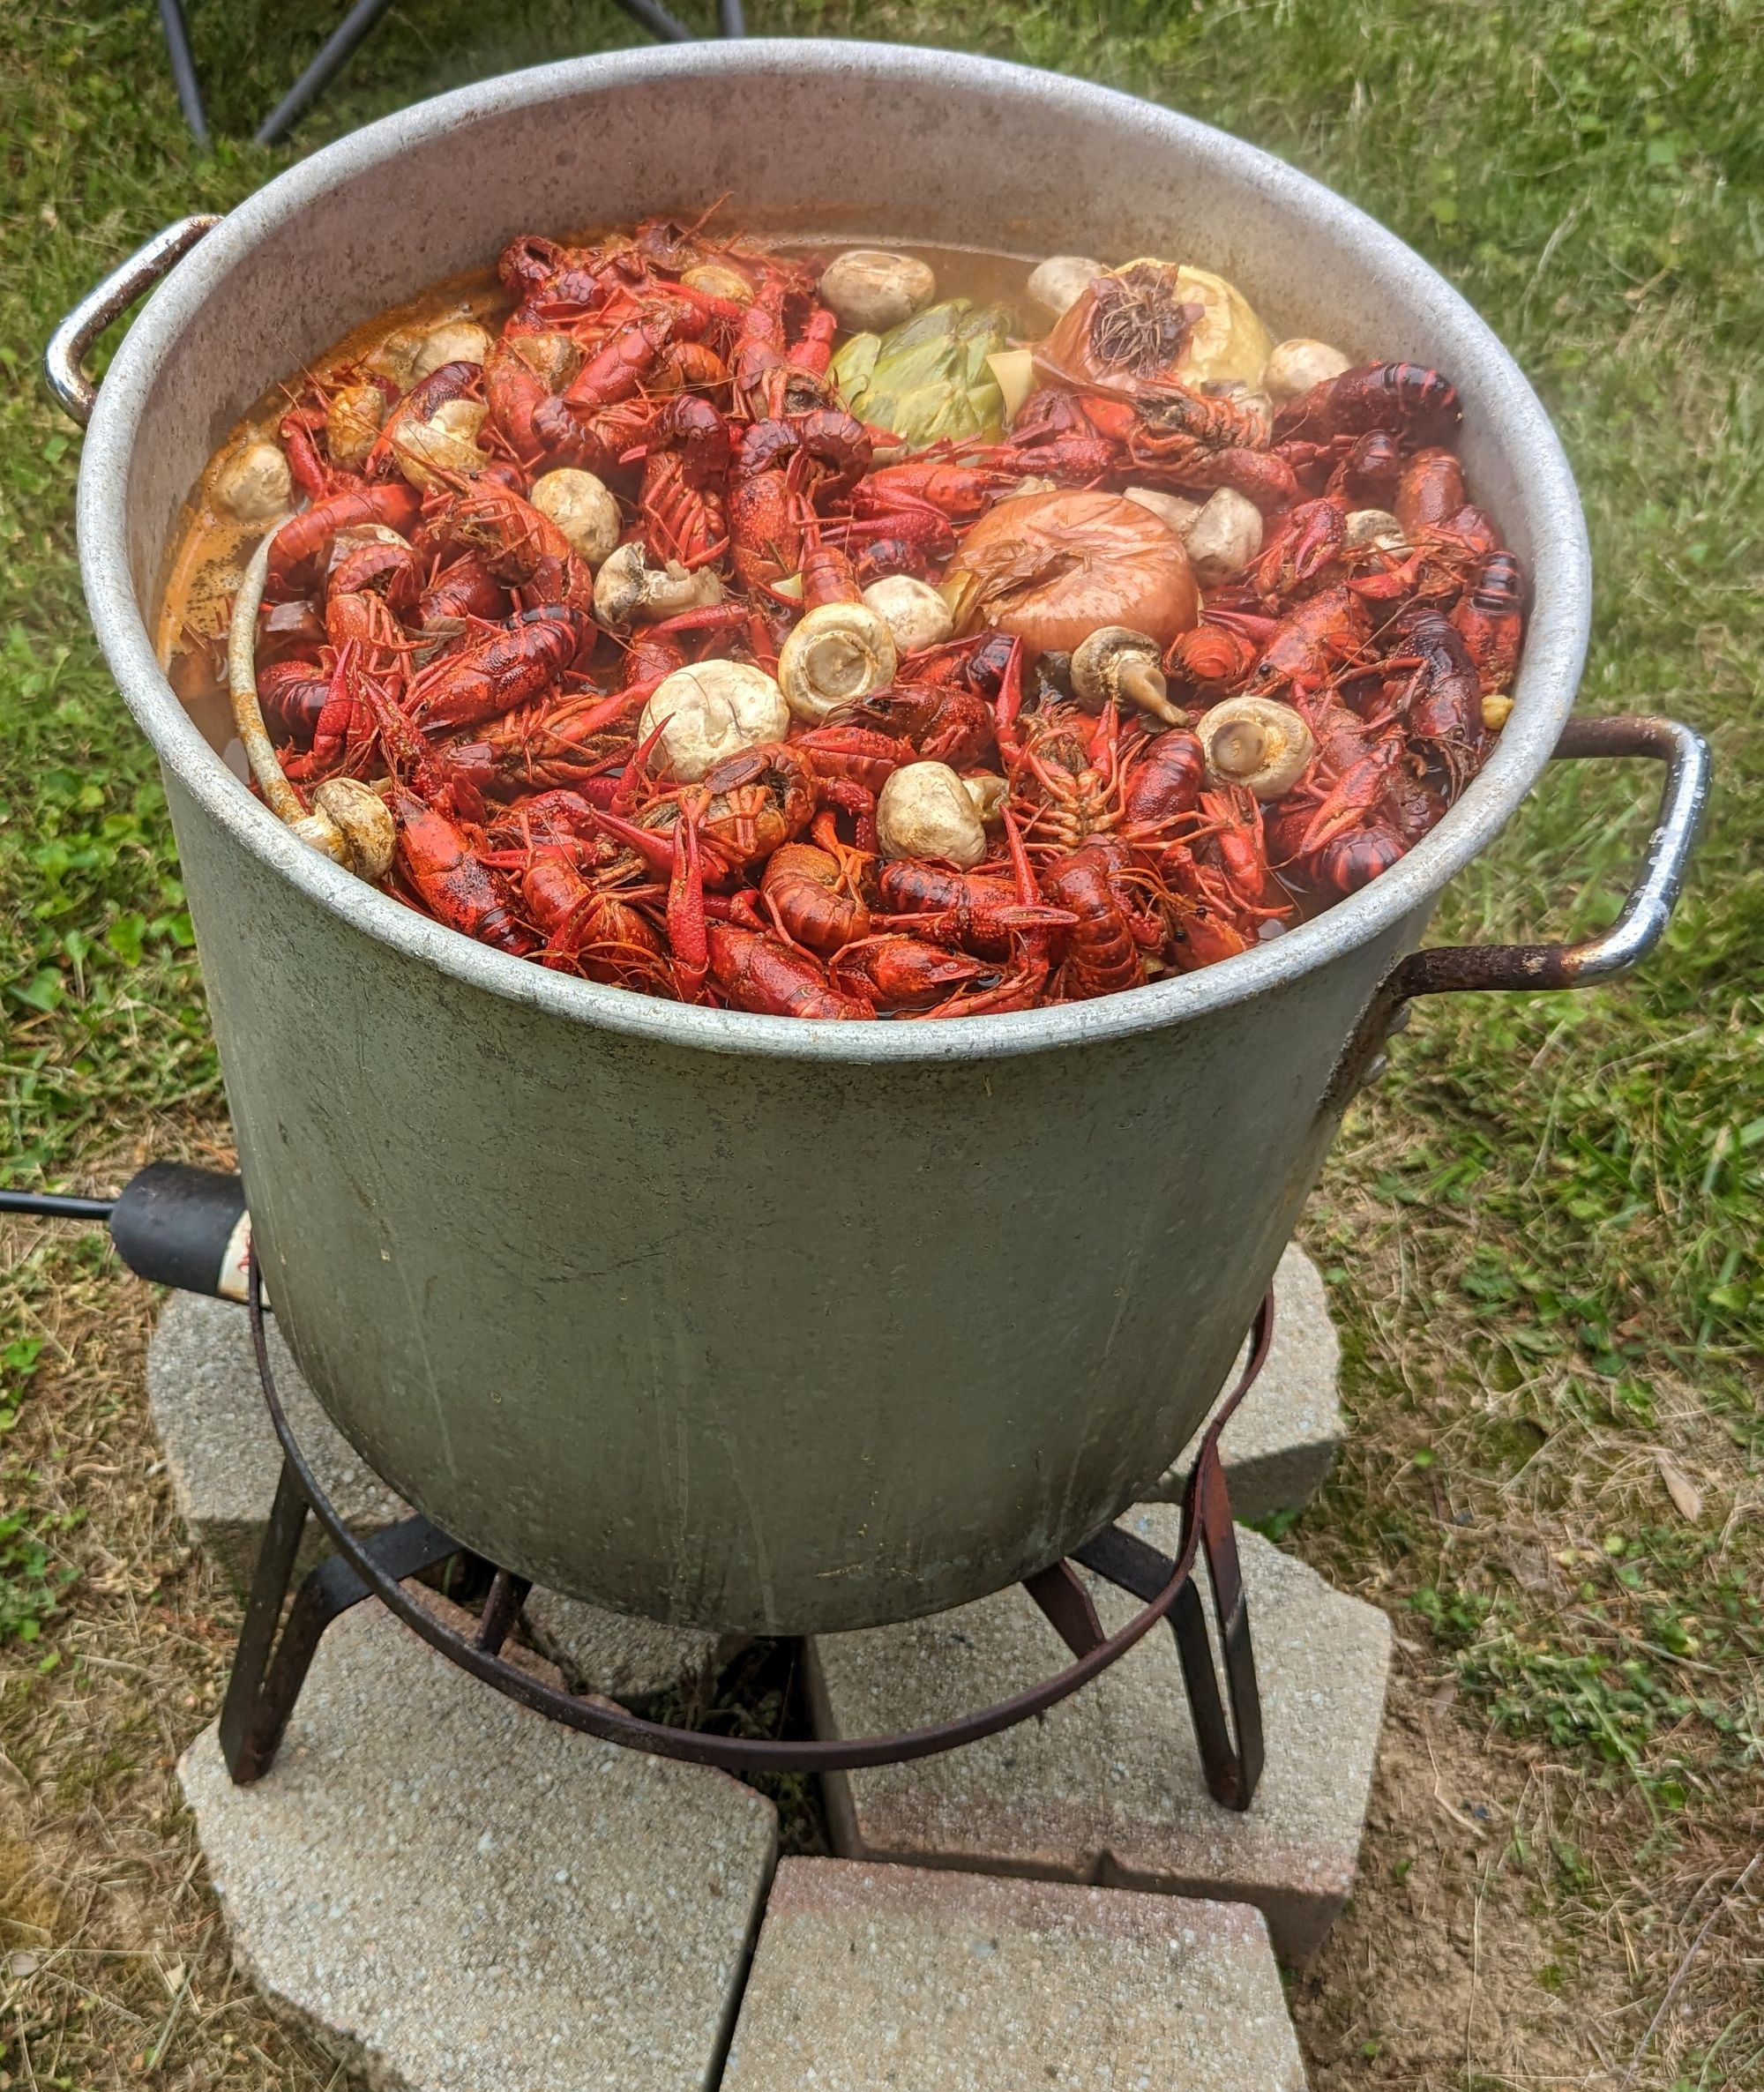 Crawfish pot ready to serve!